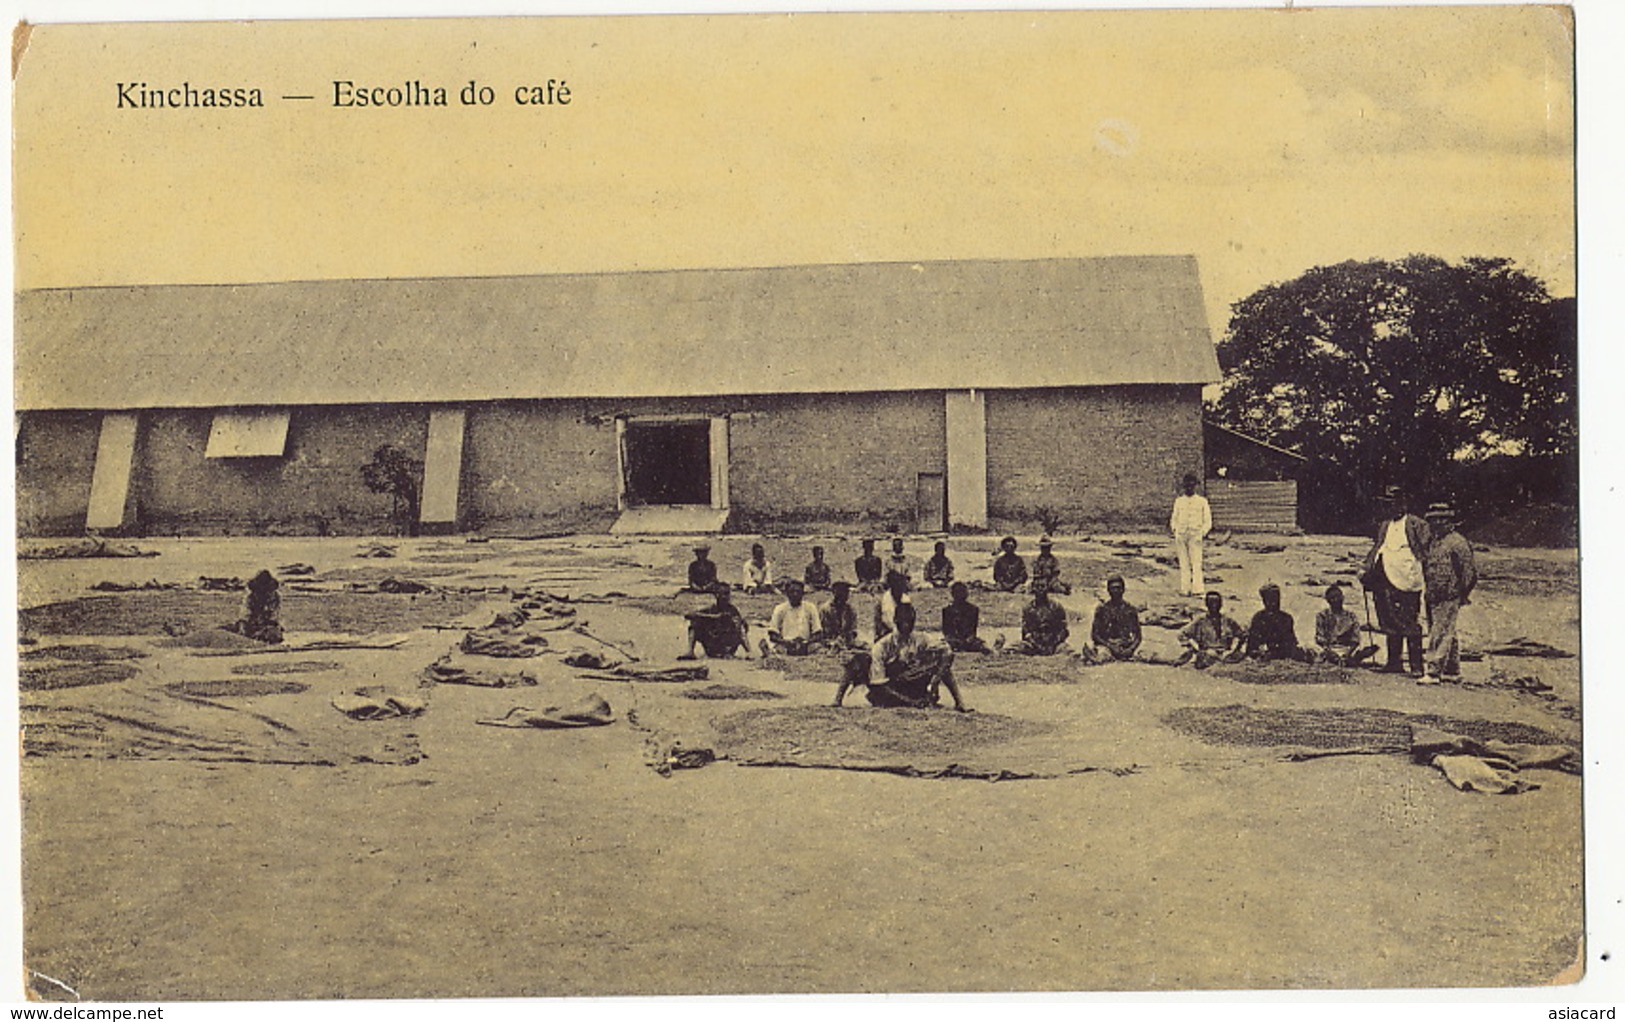 Kinchassa Escolha Do Café - Kinshasa - Leopoldville